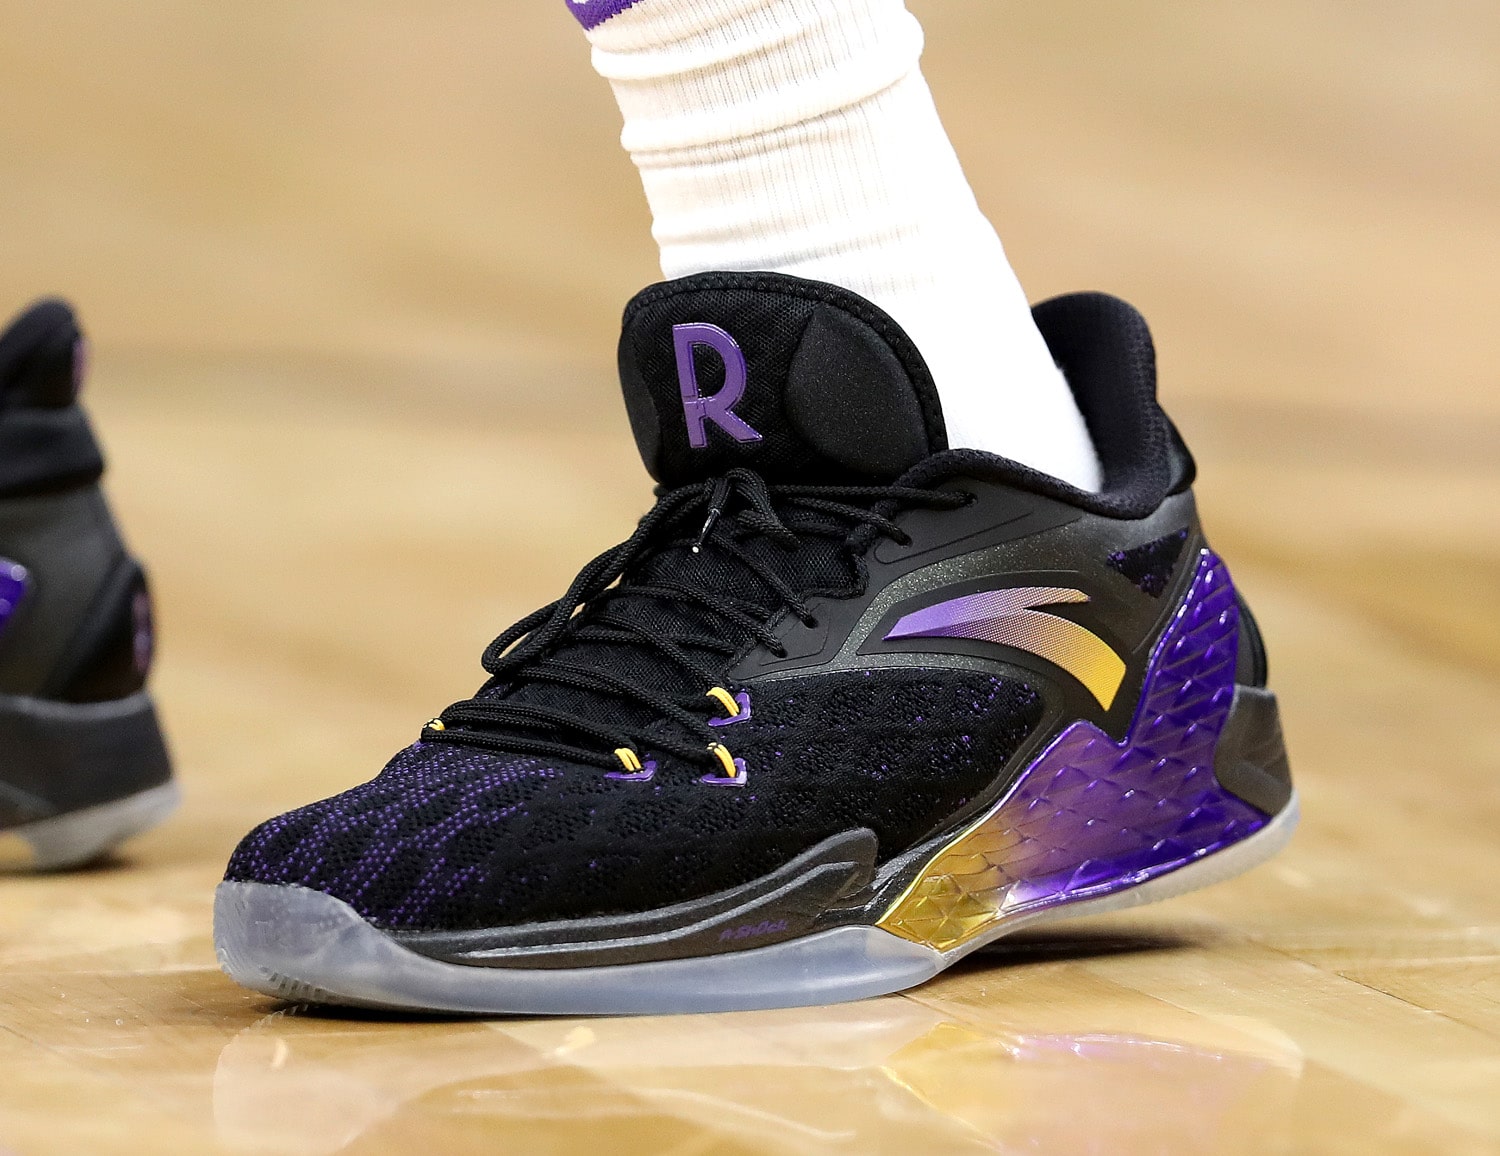 Anta 2017 Rajon Rondo RR5 Golden State Warriors NBA Basketball Shoes